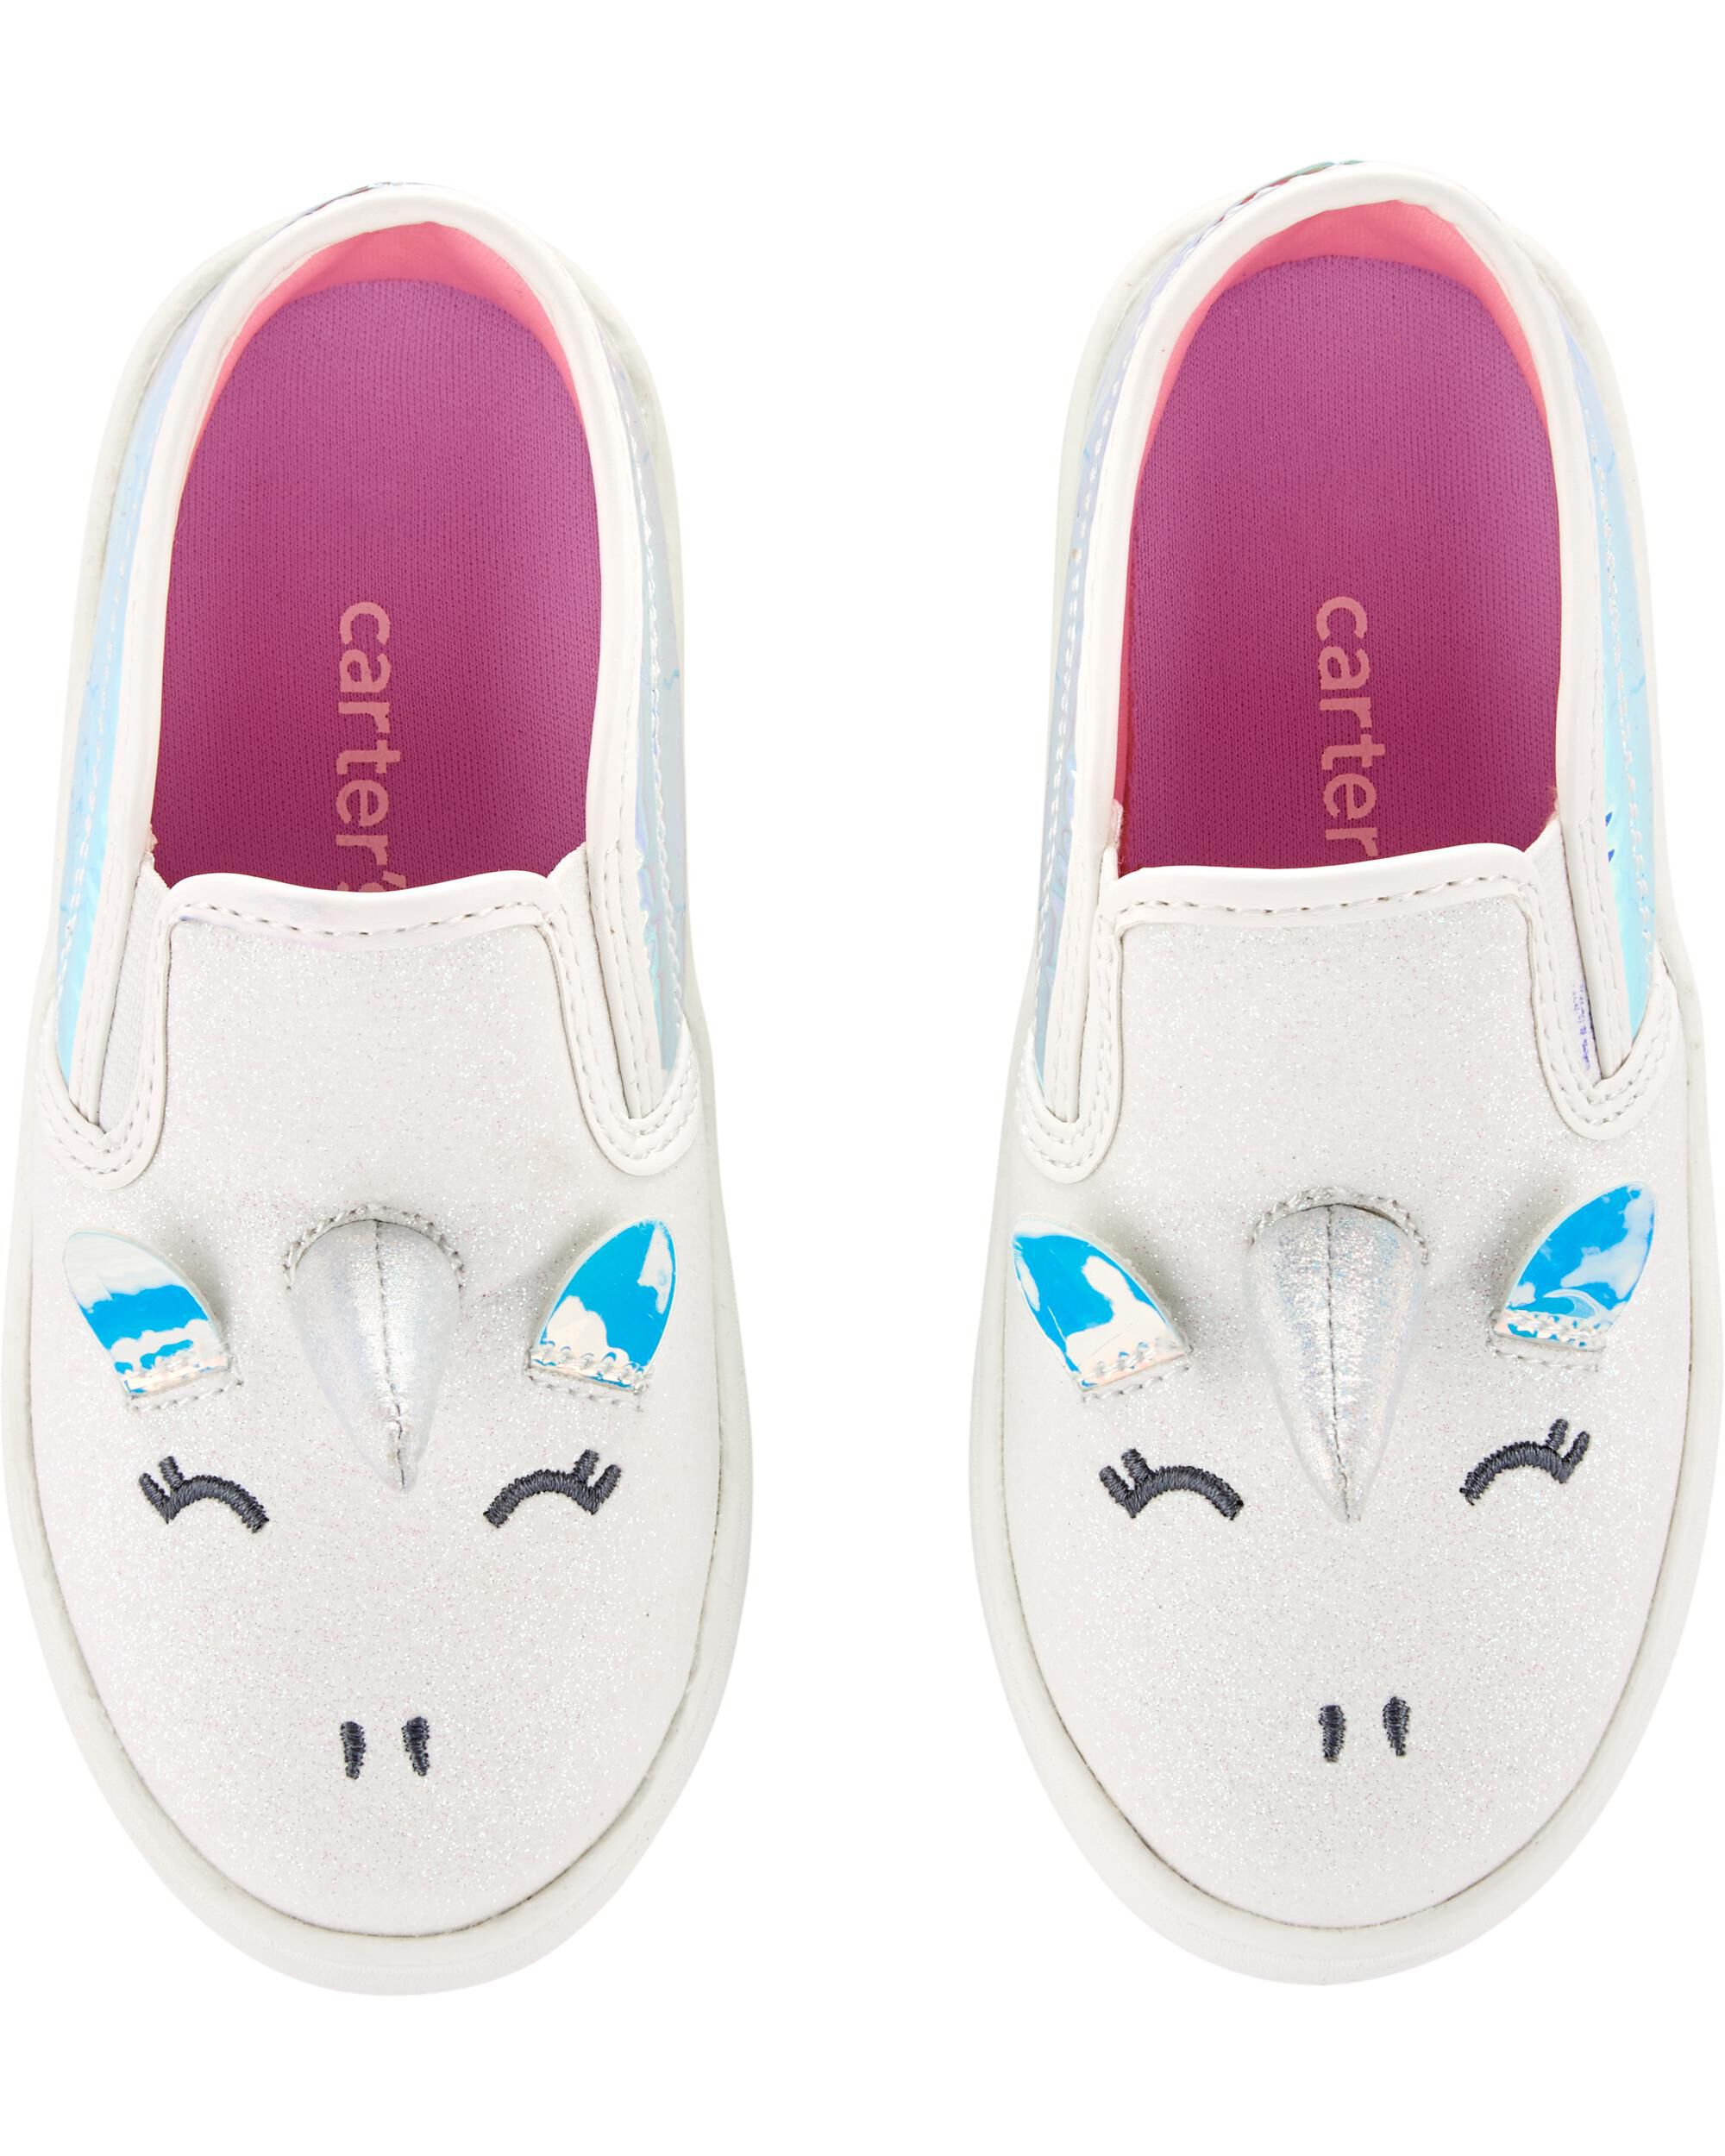 carters unicorn slippers